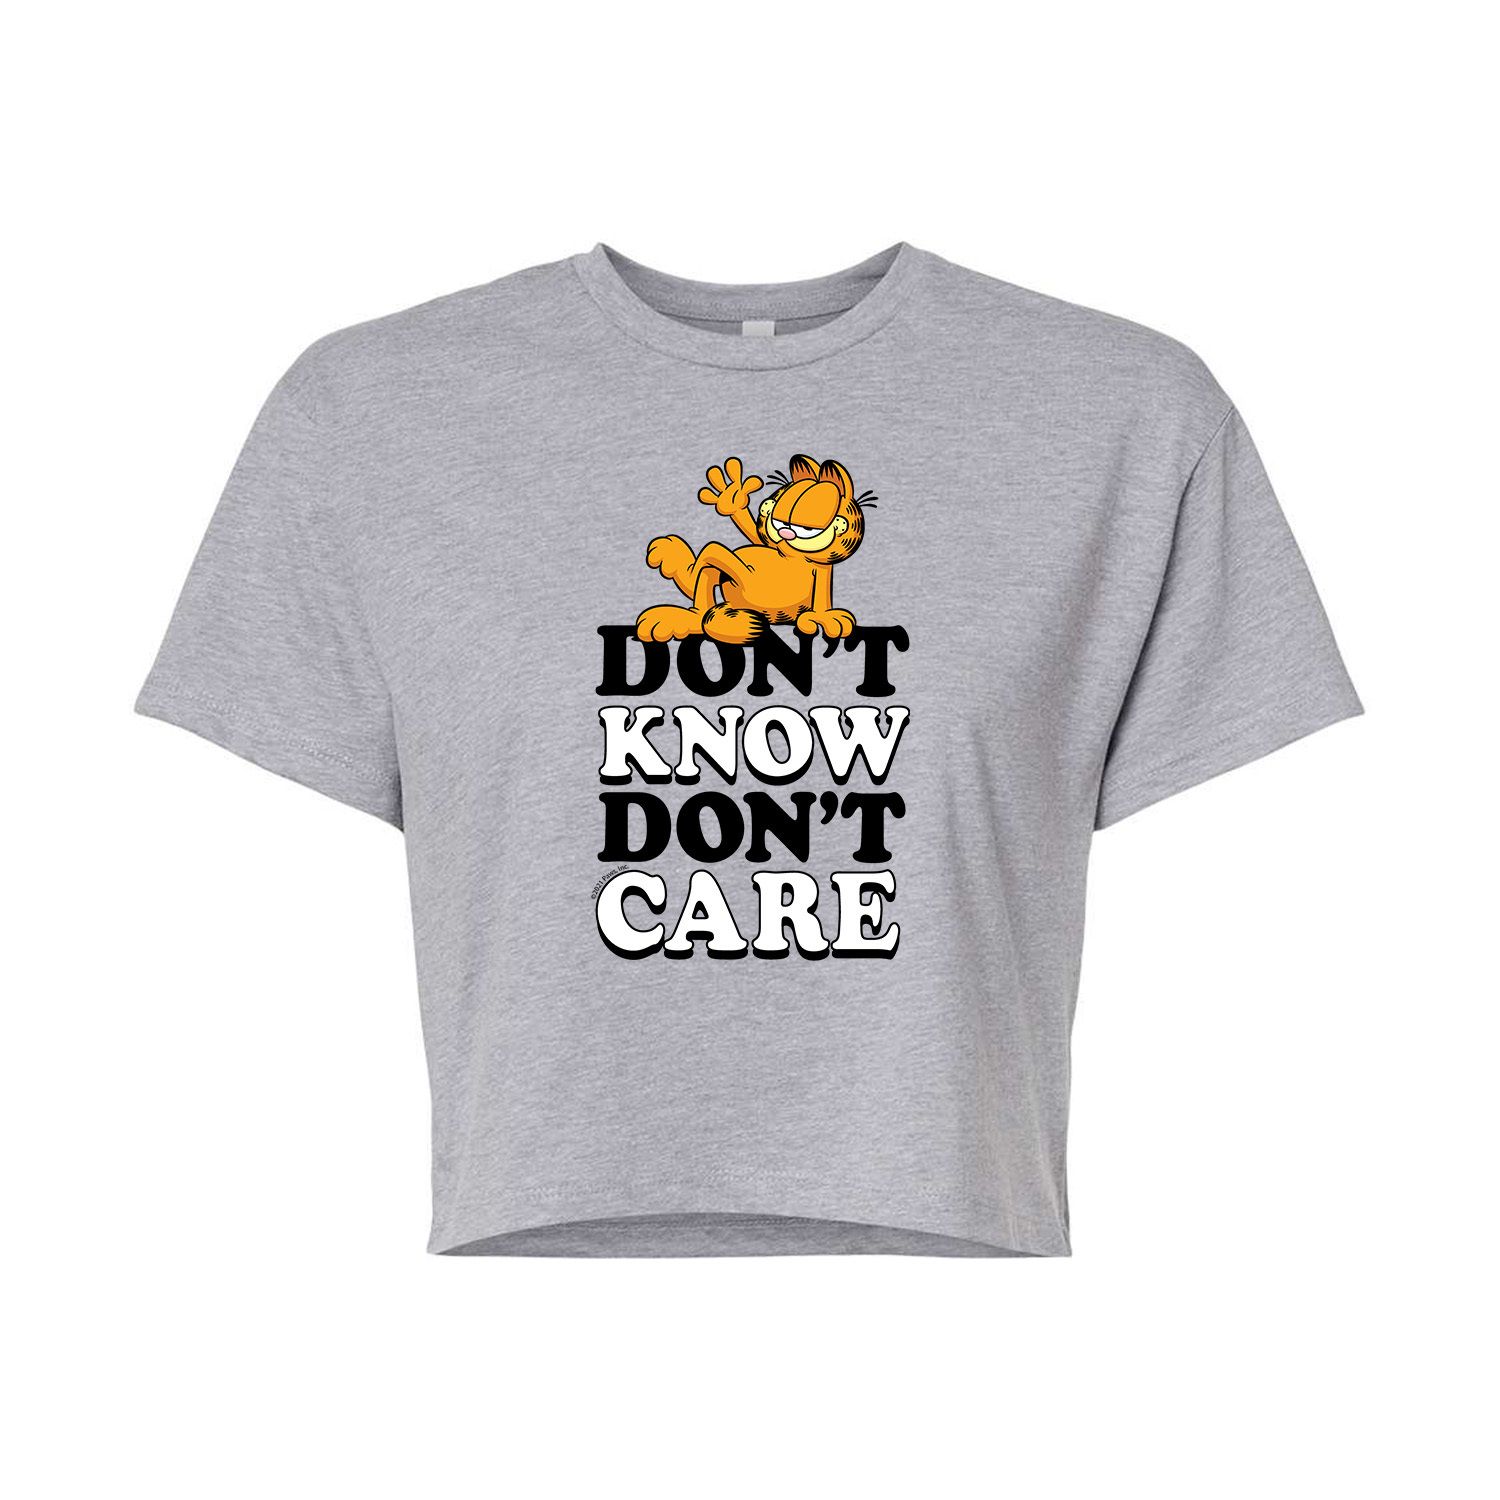 Укороченная футболка Garfield Don't Care для юниоров Licensed Character